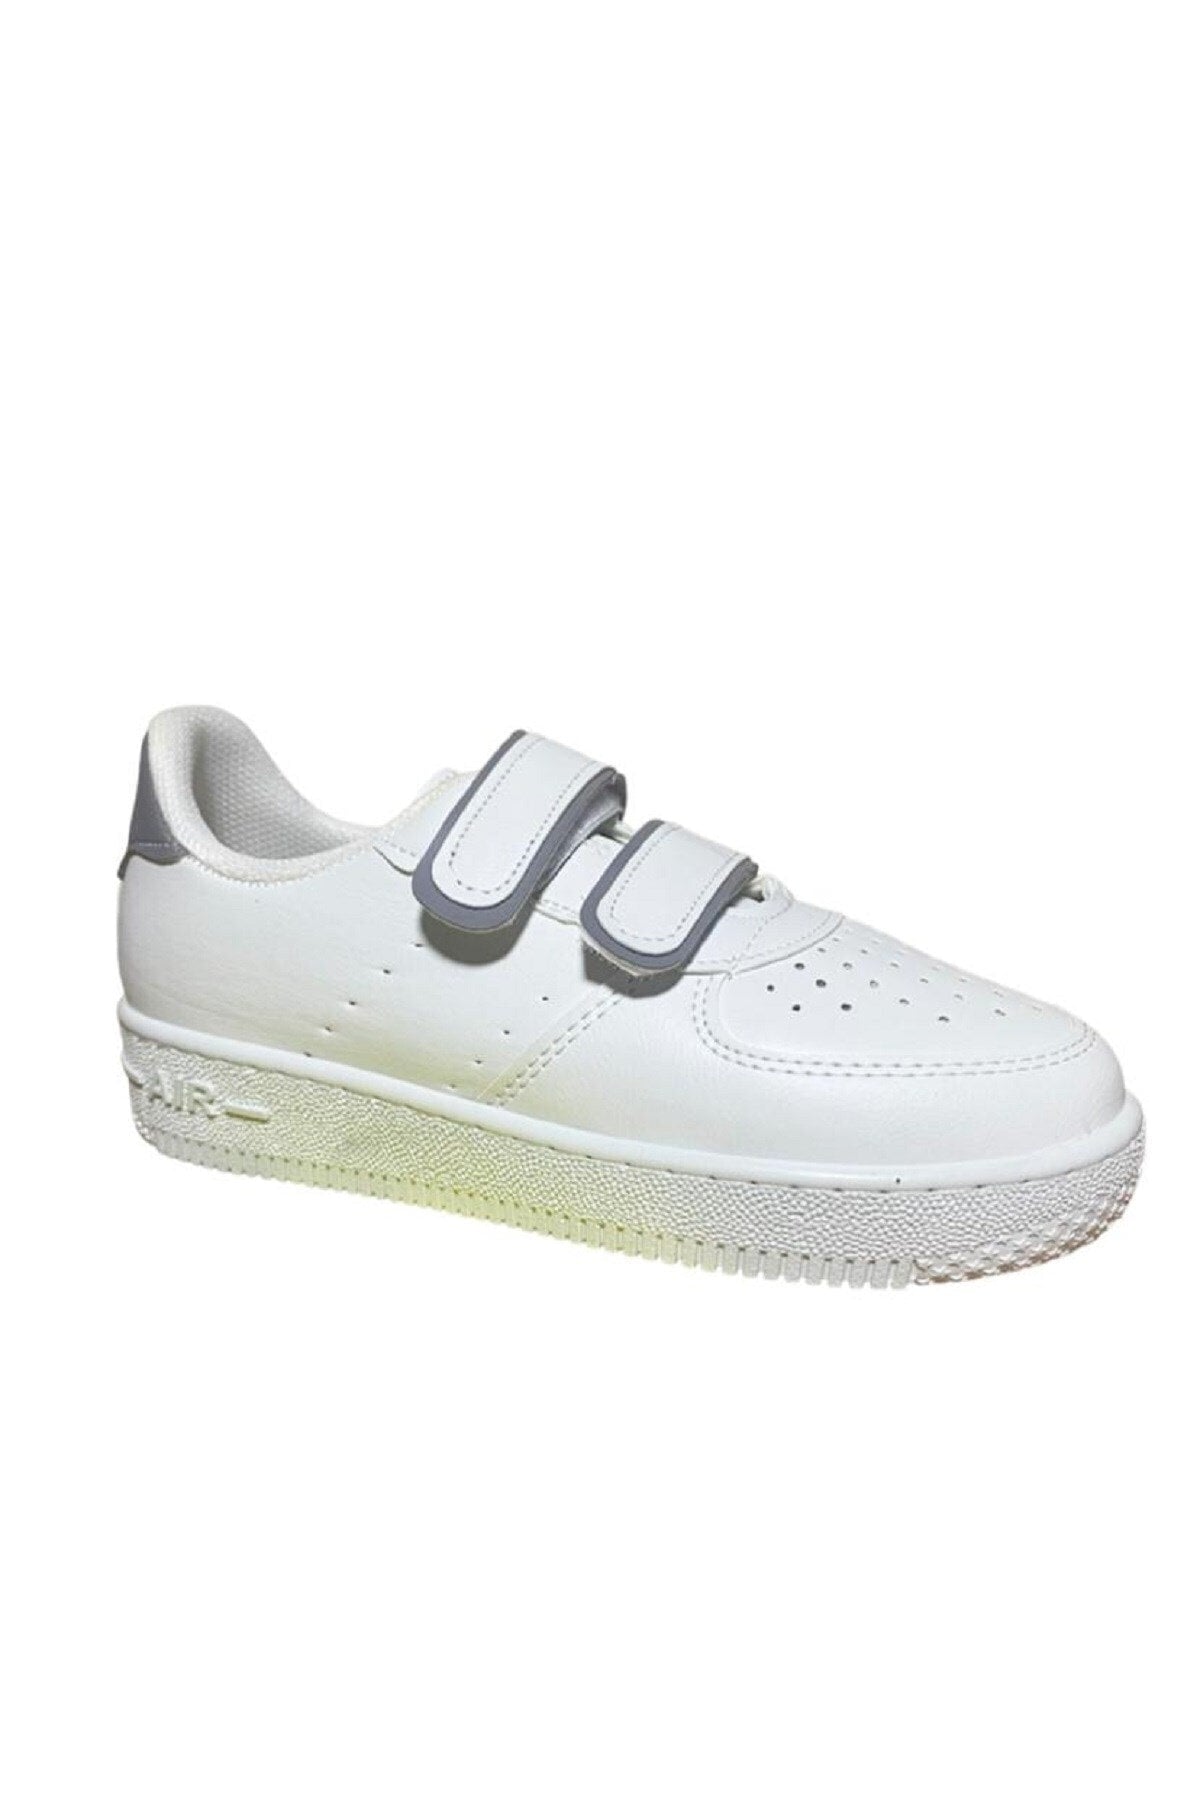 Unisex Girls Boys Velcro Sneakers Sneaker - White Smoked